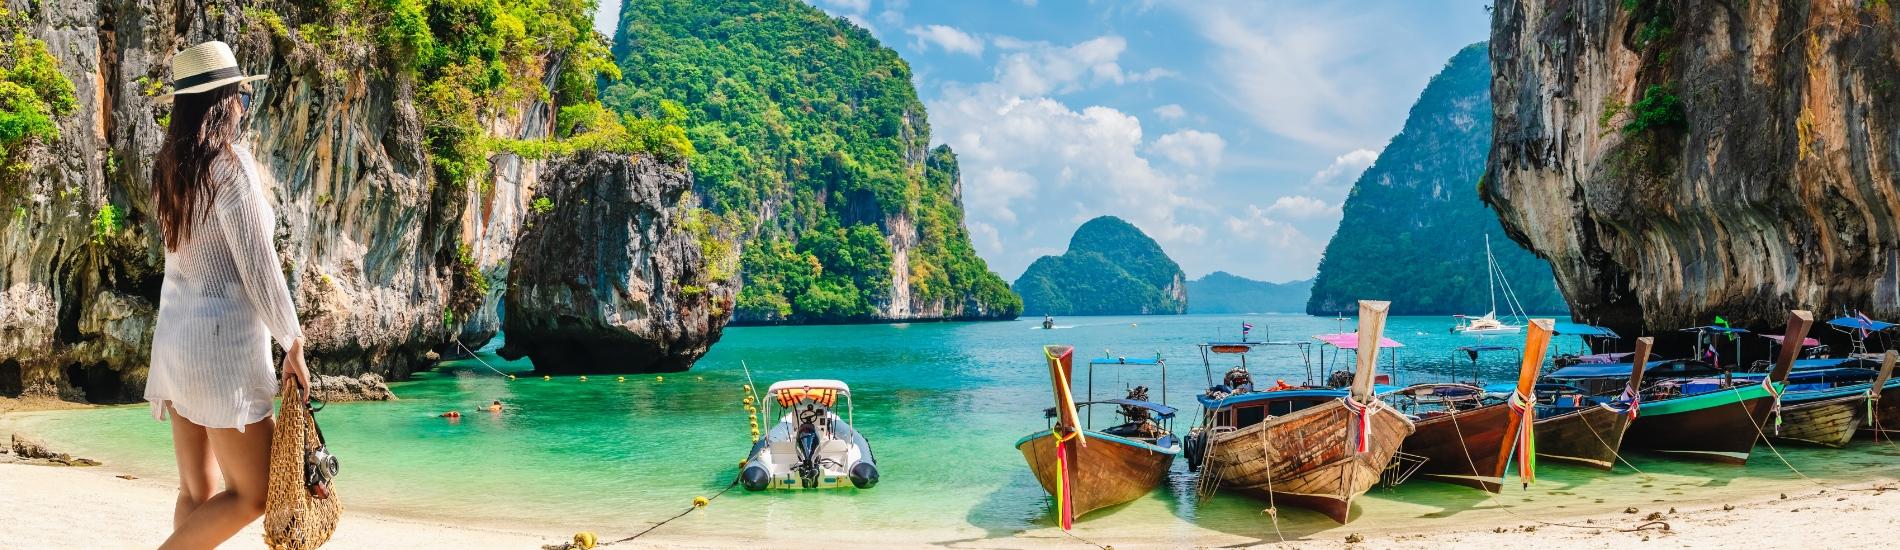 Vacanze in Thailandia | Eden Viaggi